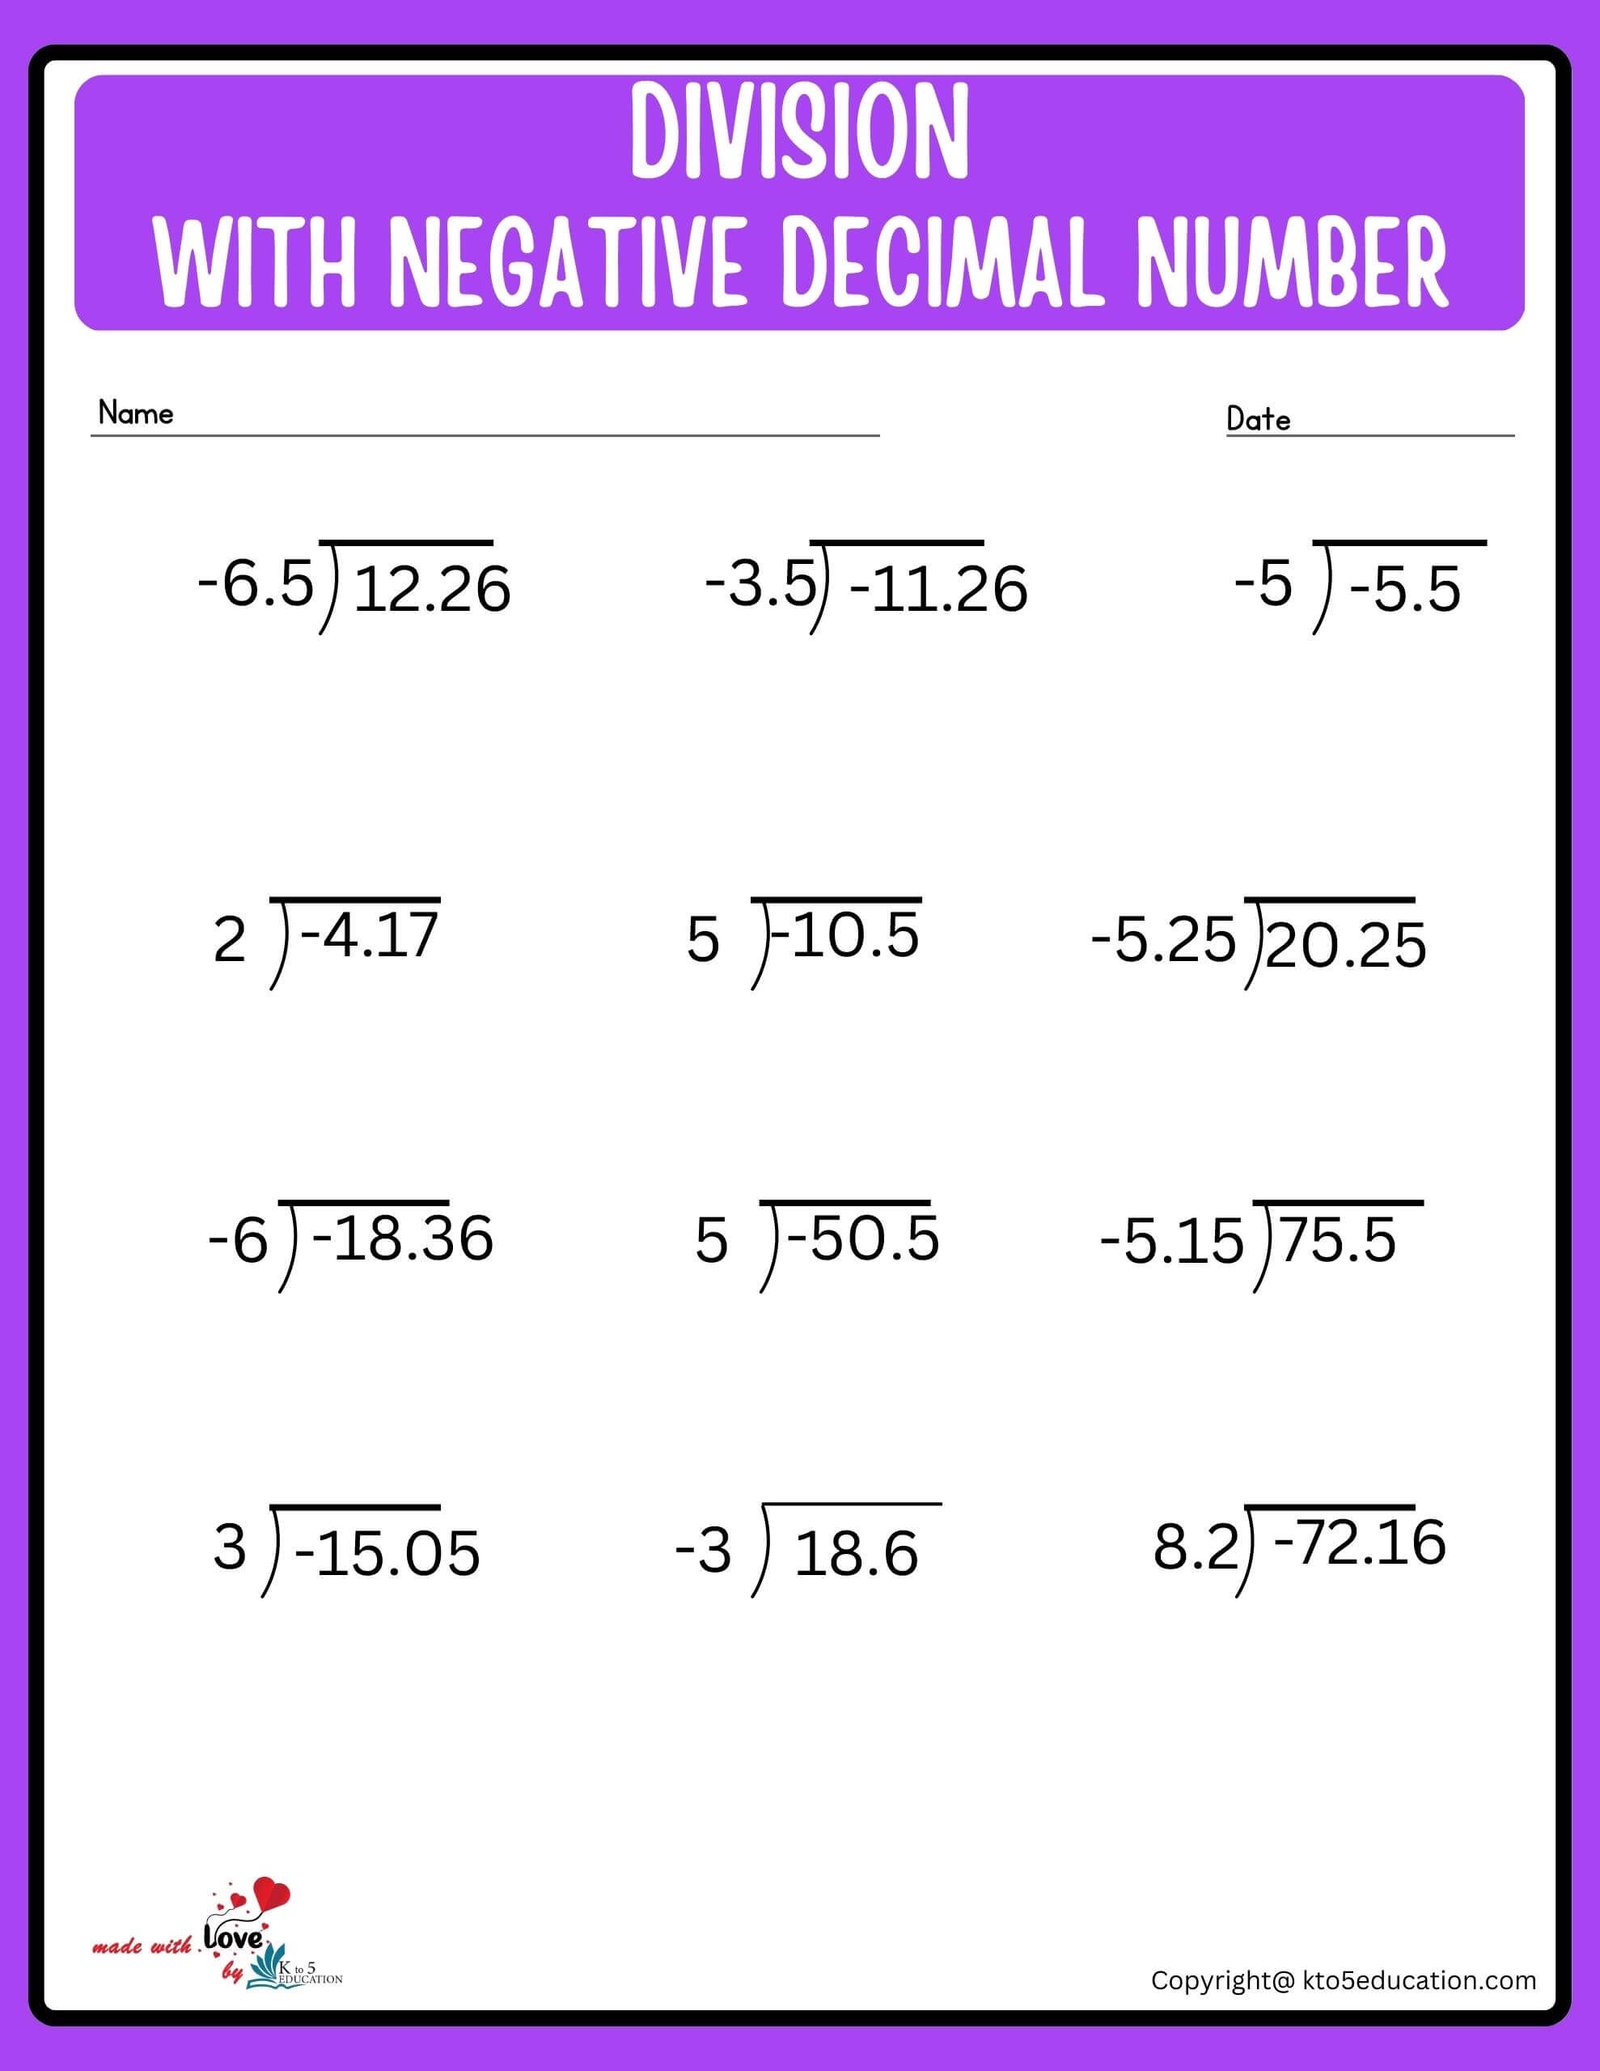 Division With Decimal Negative Intergers Worksheet